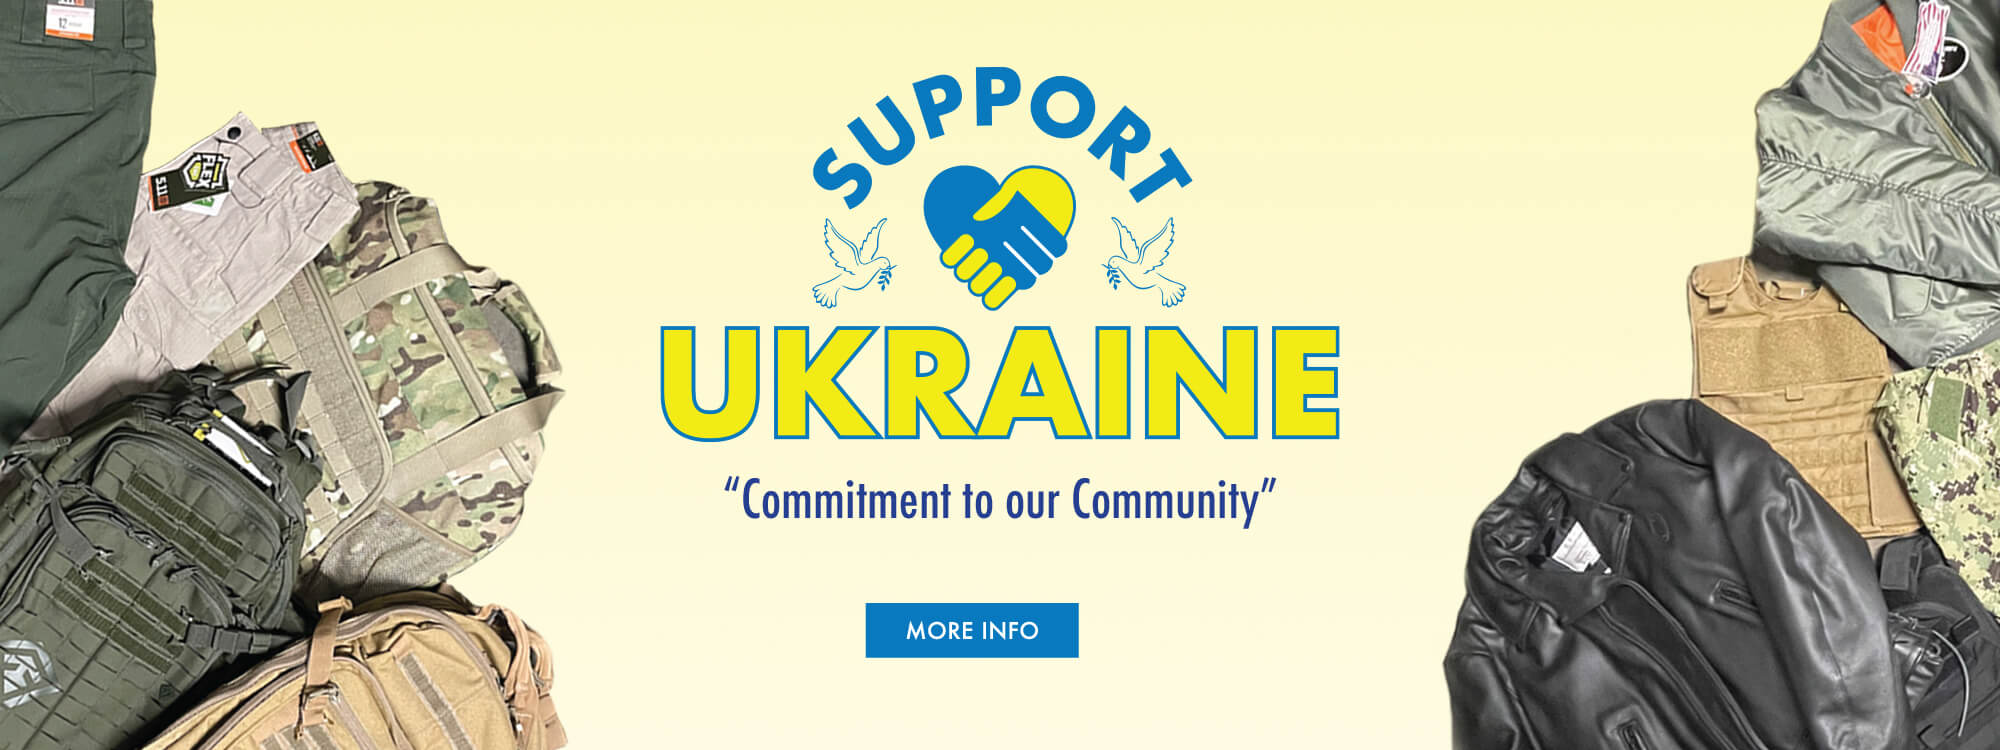 UKRAINE_HP_BANNER.jpg